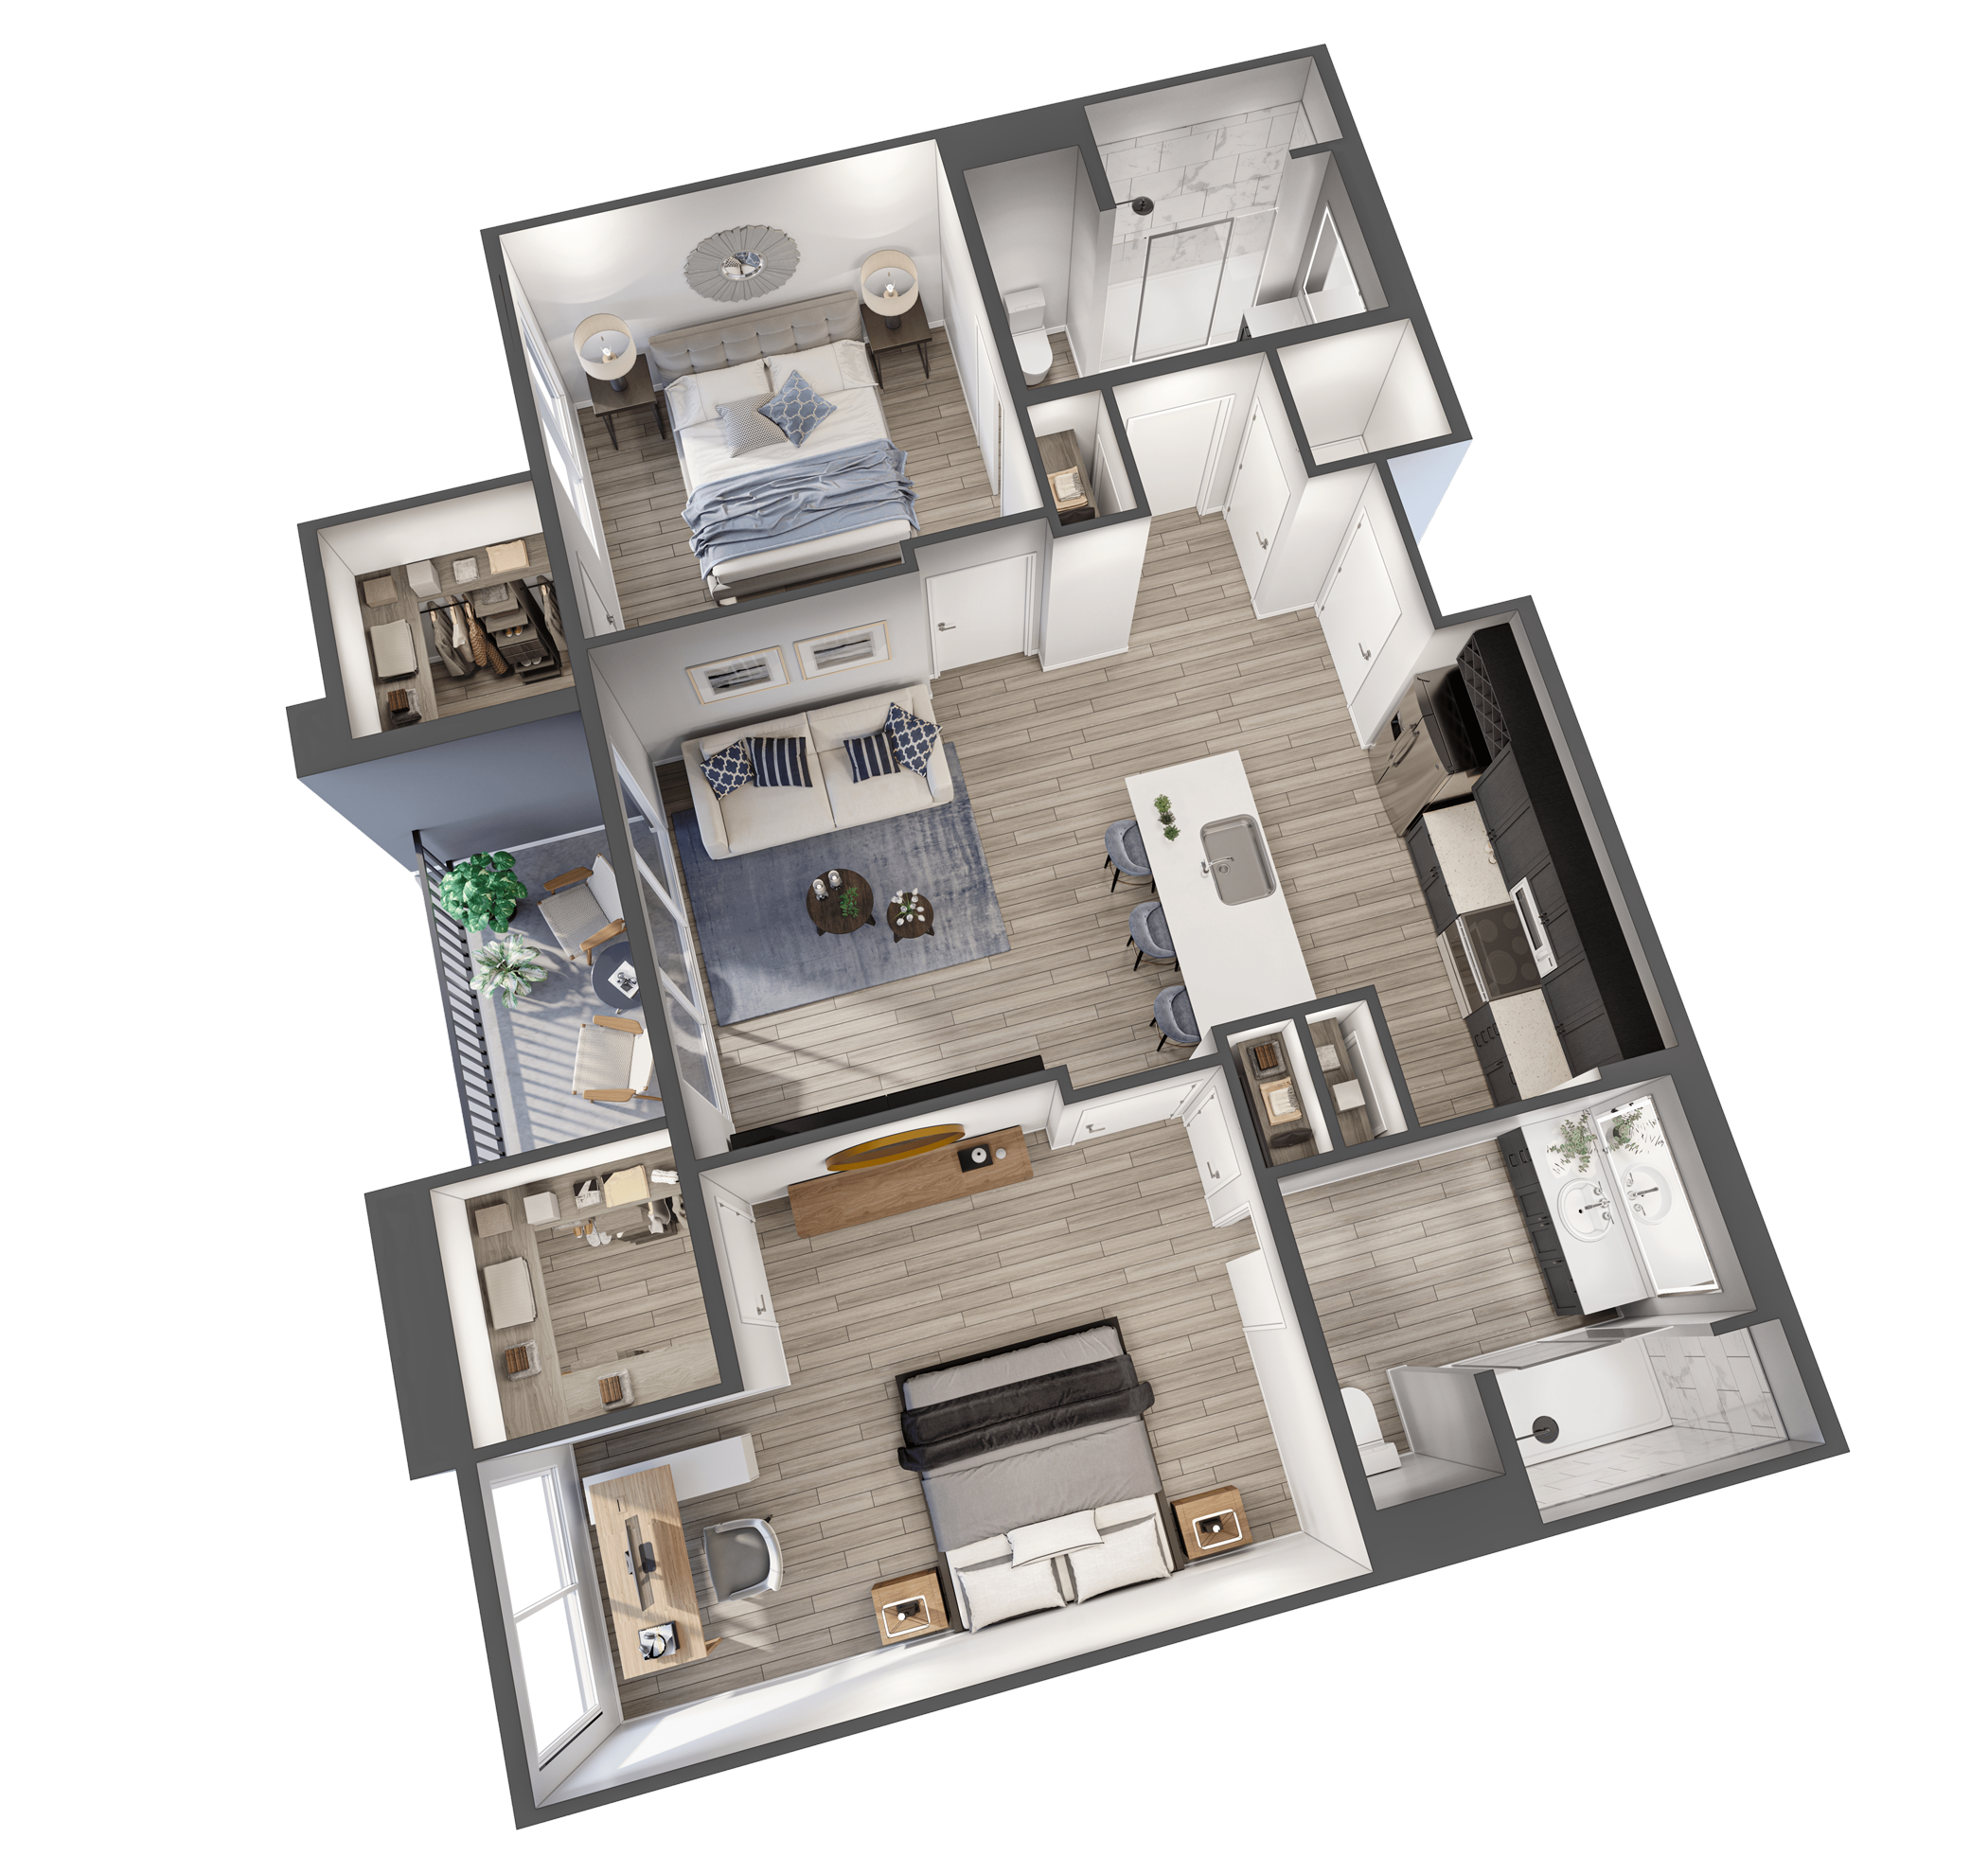 a 3d floor plan of a house